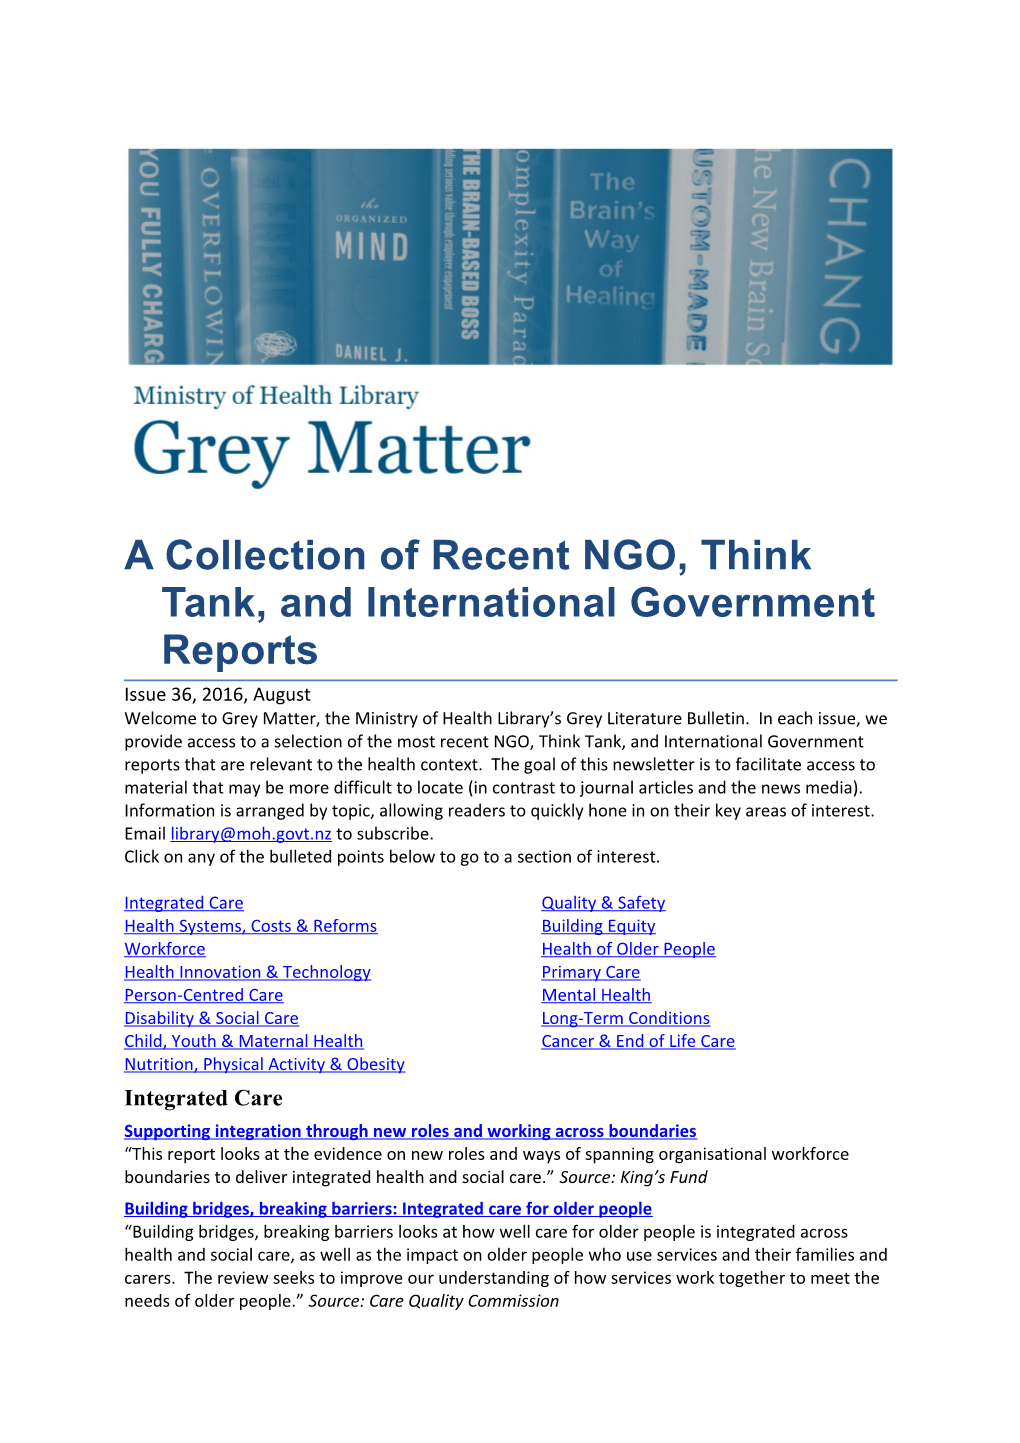 Grey Matter, Issue 36, August 2016